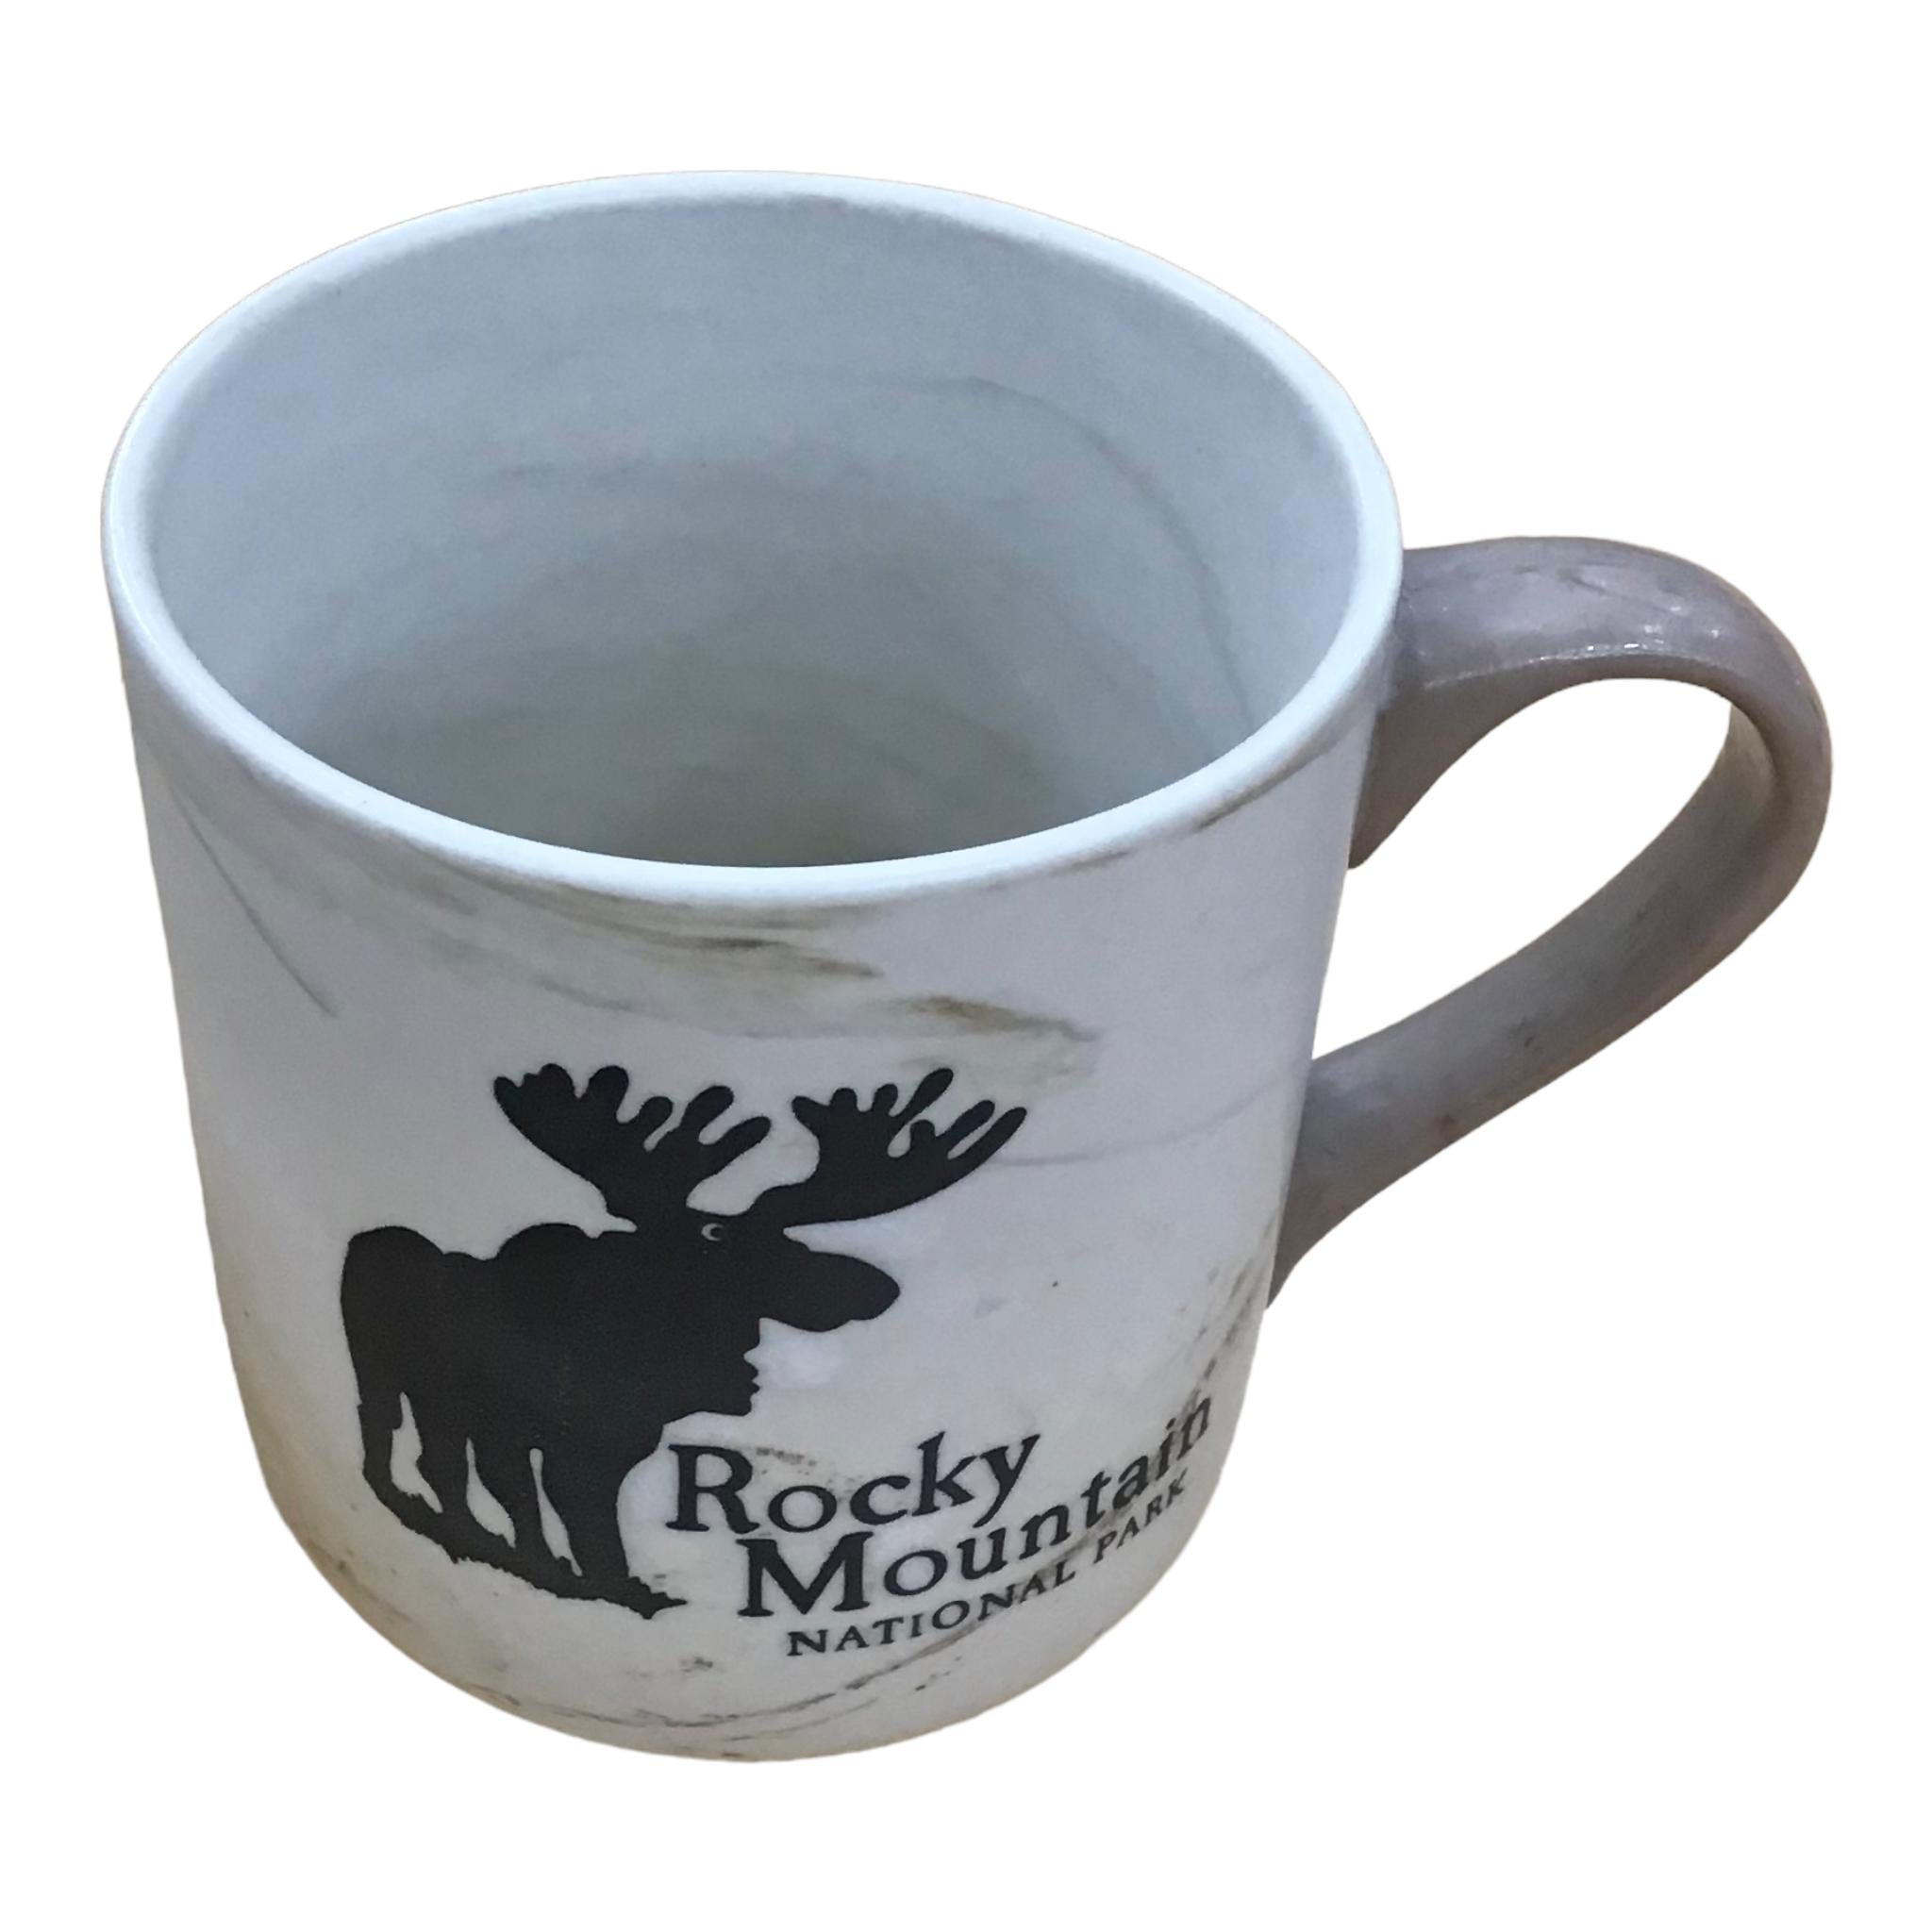 Rocky Mountain Moose Ceramic Marble Mug | Moose Mug Gifts for Moose Lover Coffee Cup | Hot Chocolate, Tea Cup